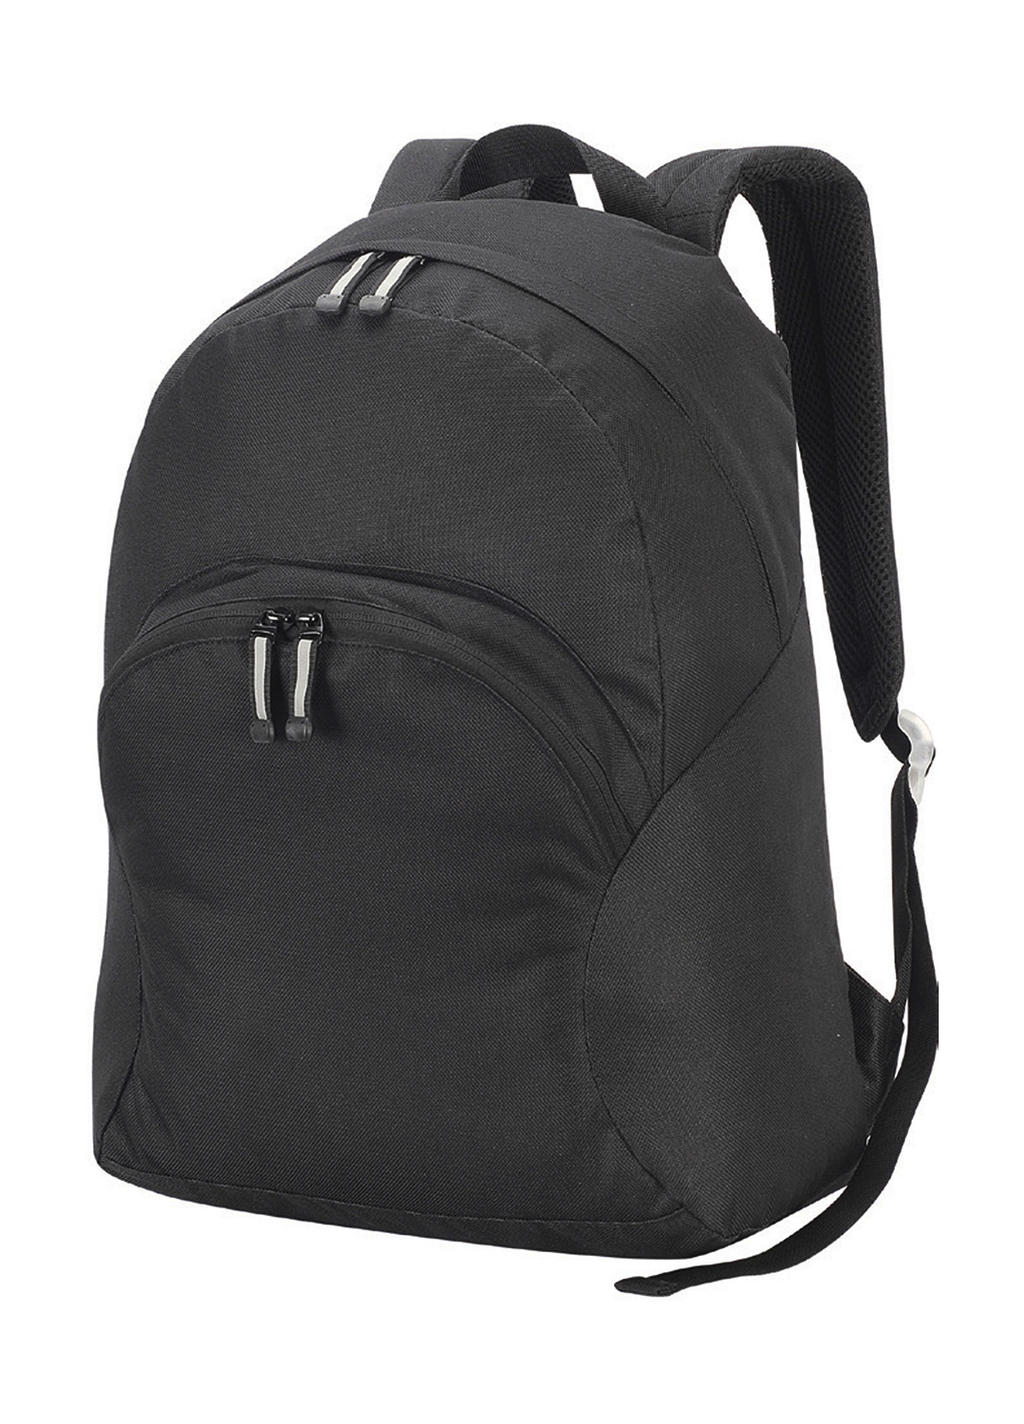  Milan Backpack in Farbe Black